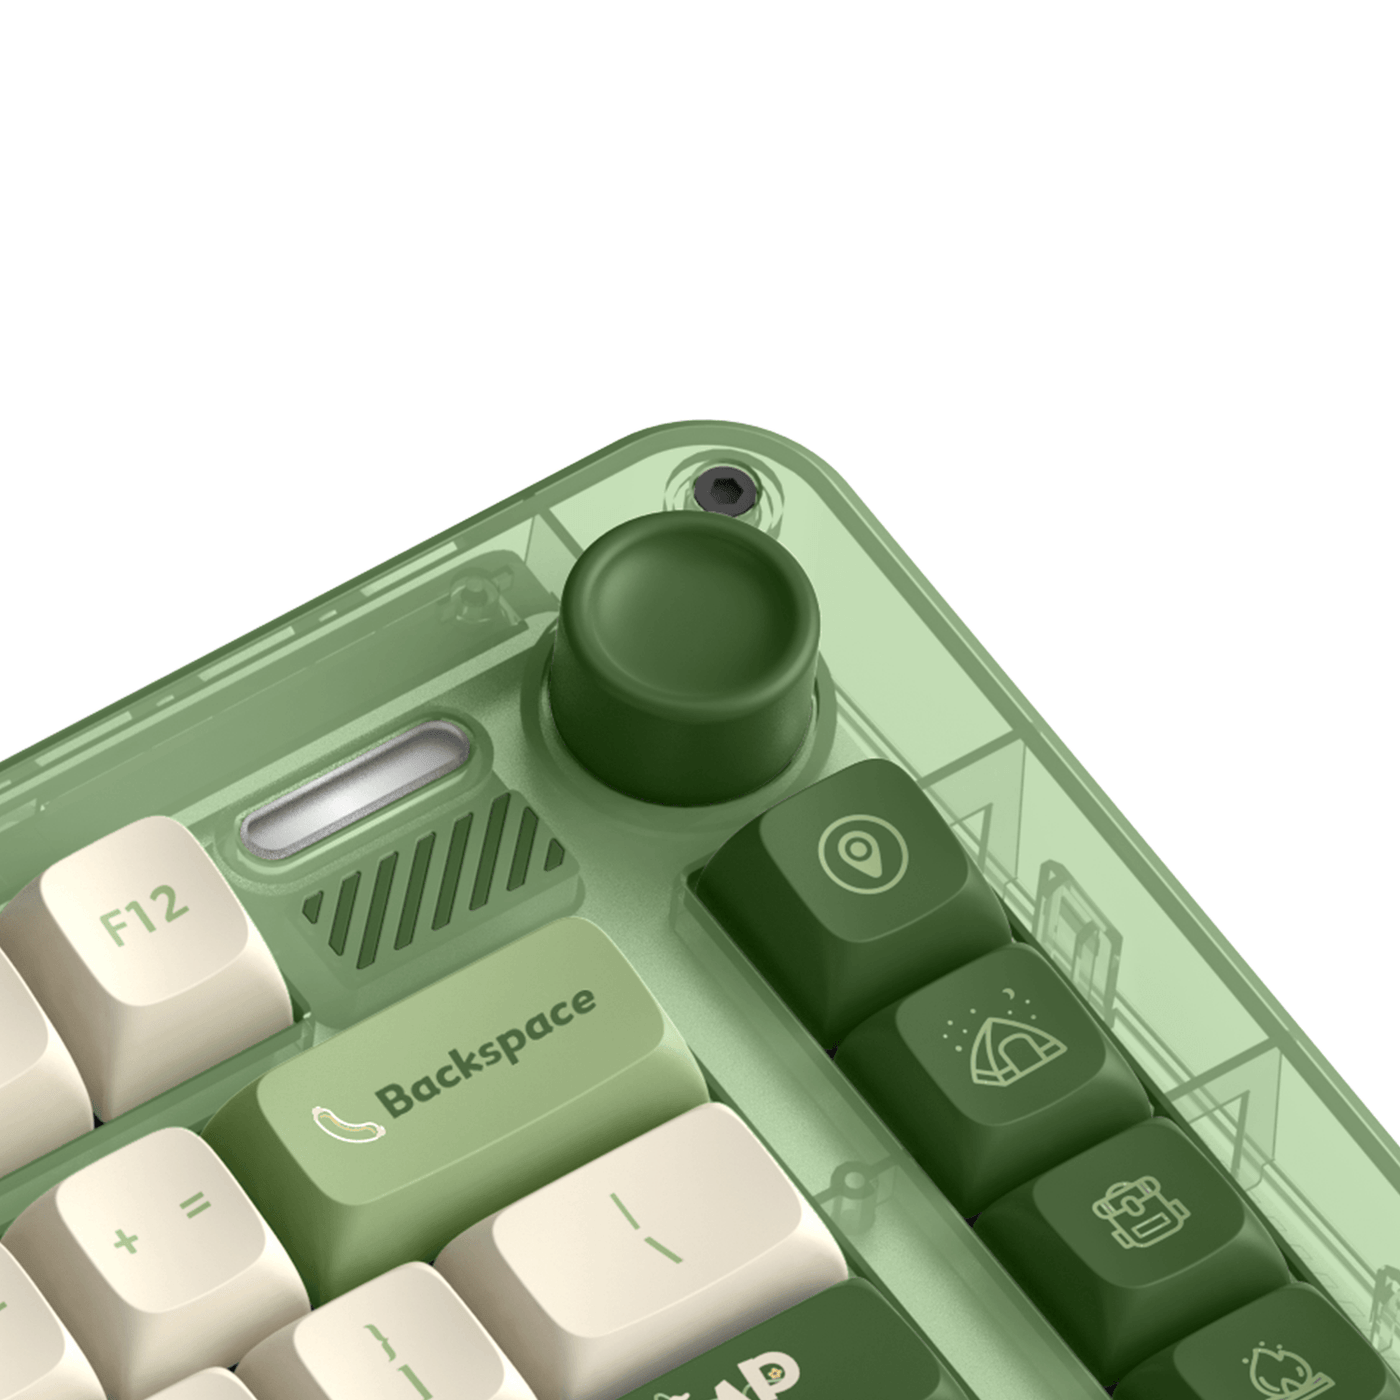 IQUNIX ZX75 Camping Wireless Mechanical Keyboard | TKL Gaming Keyboard